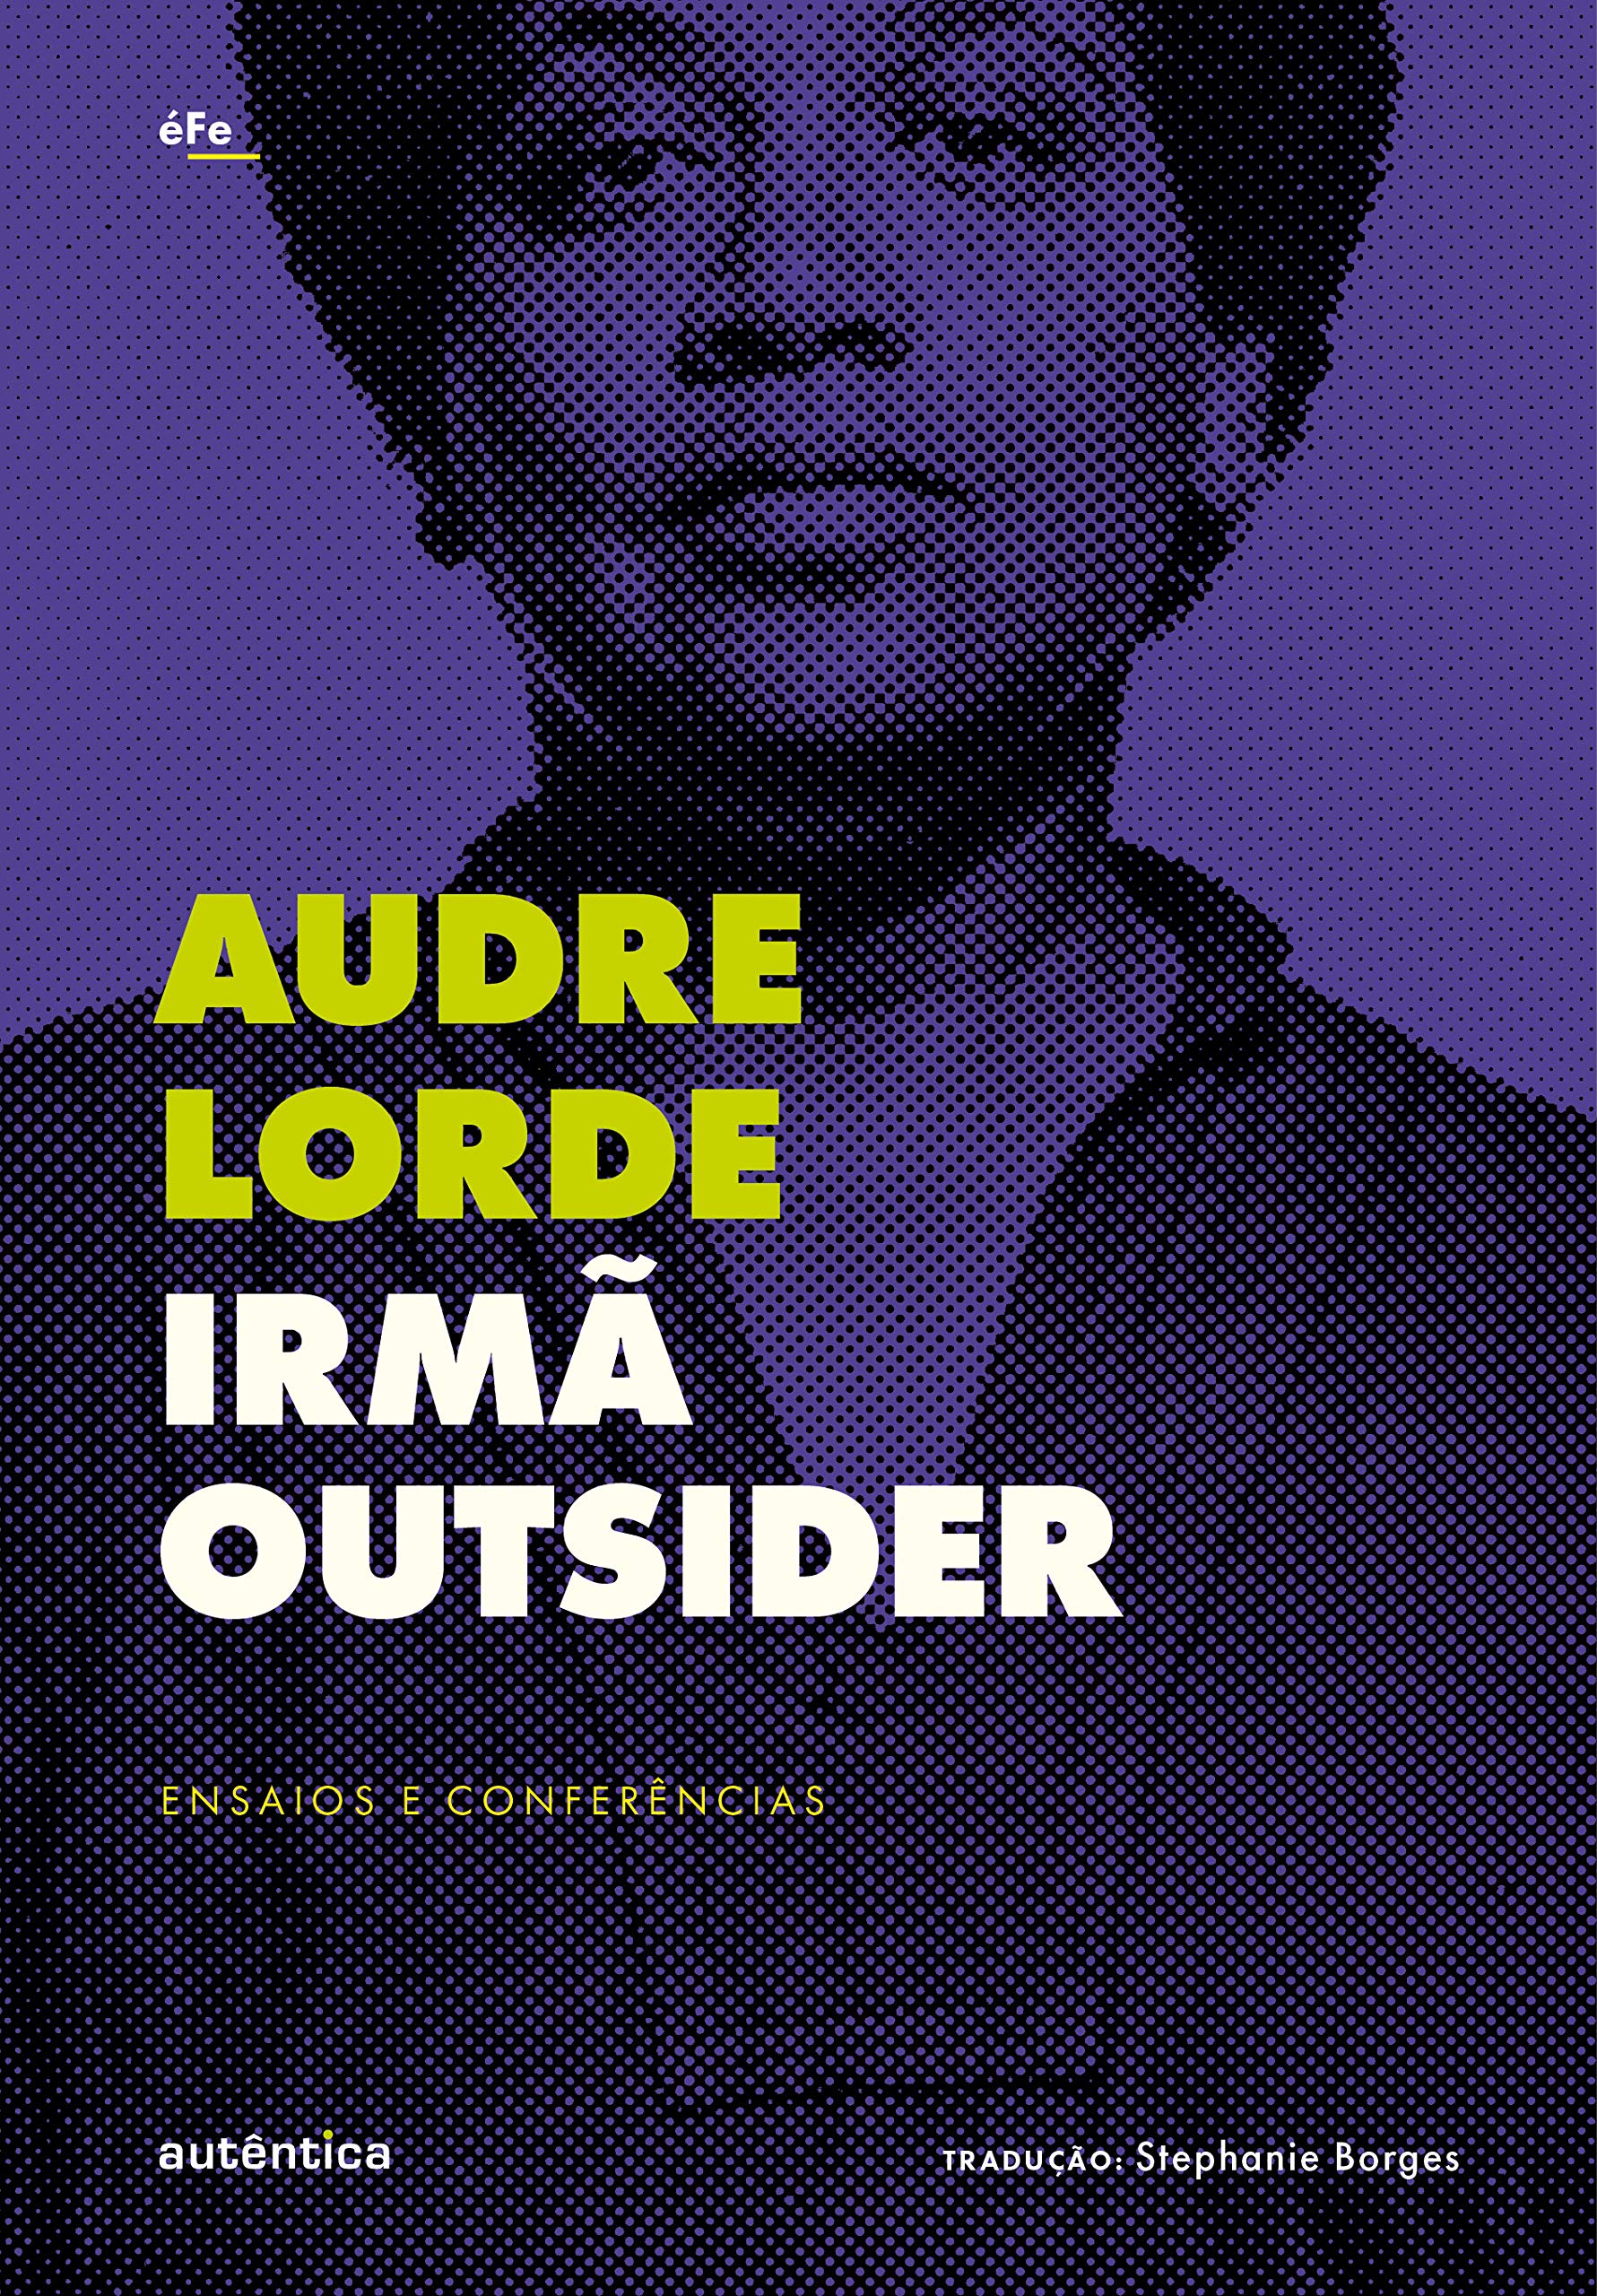 Audre Lorde: Irmã outsider (Paperback, Português language, 2020, Autêntica)